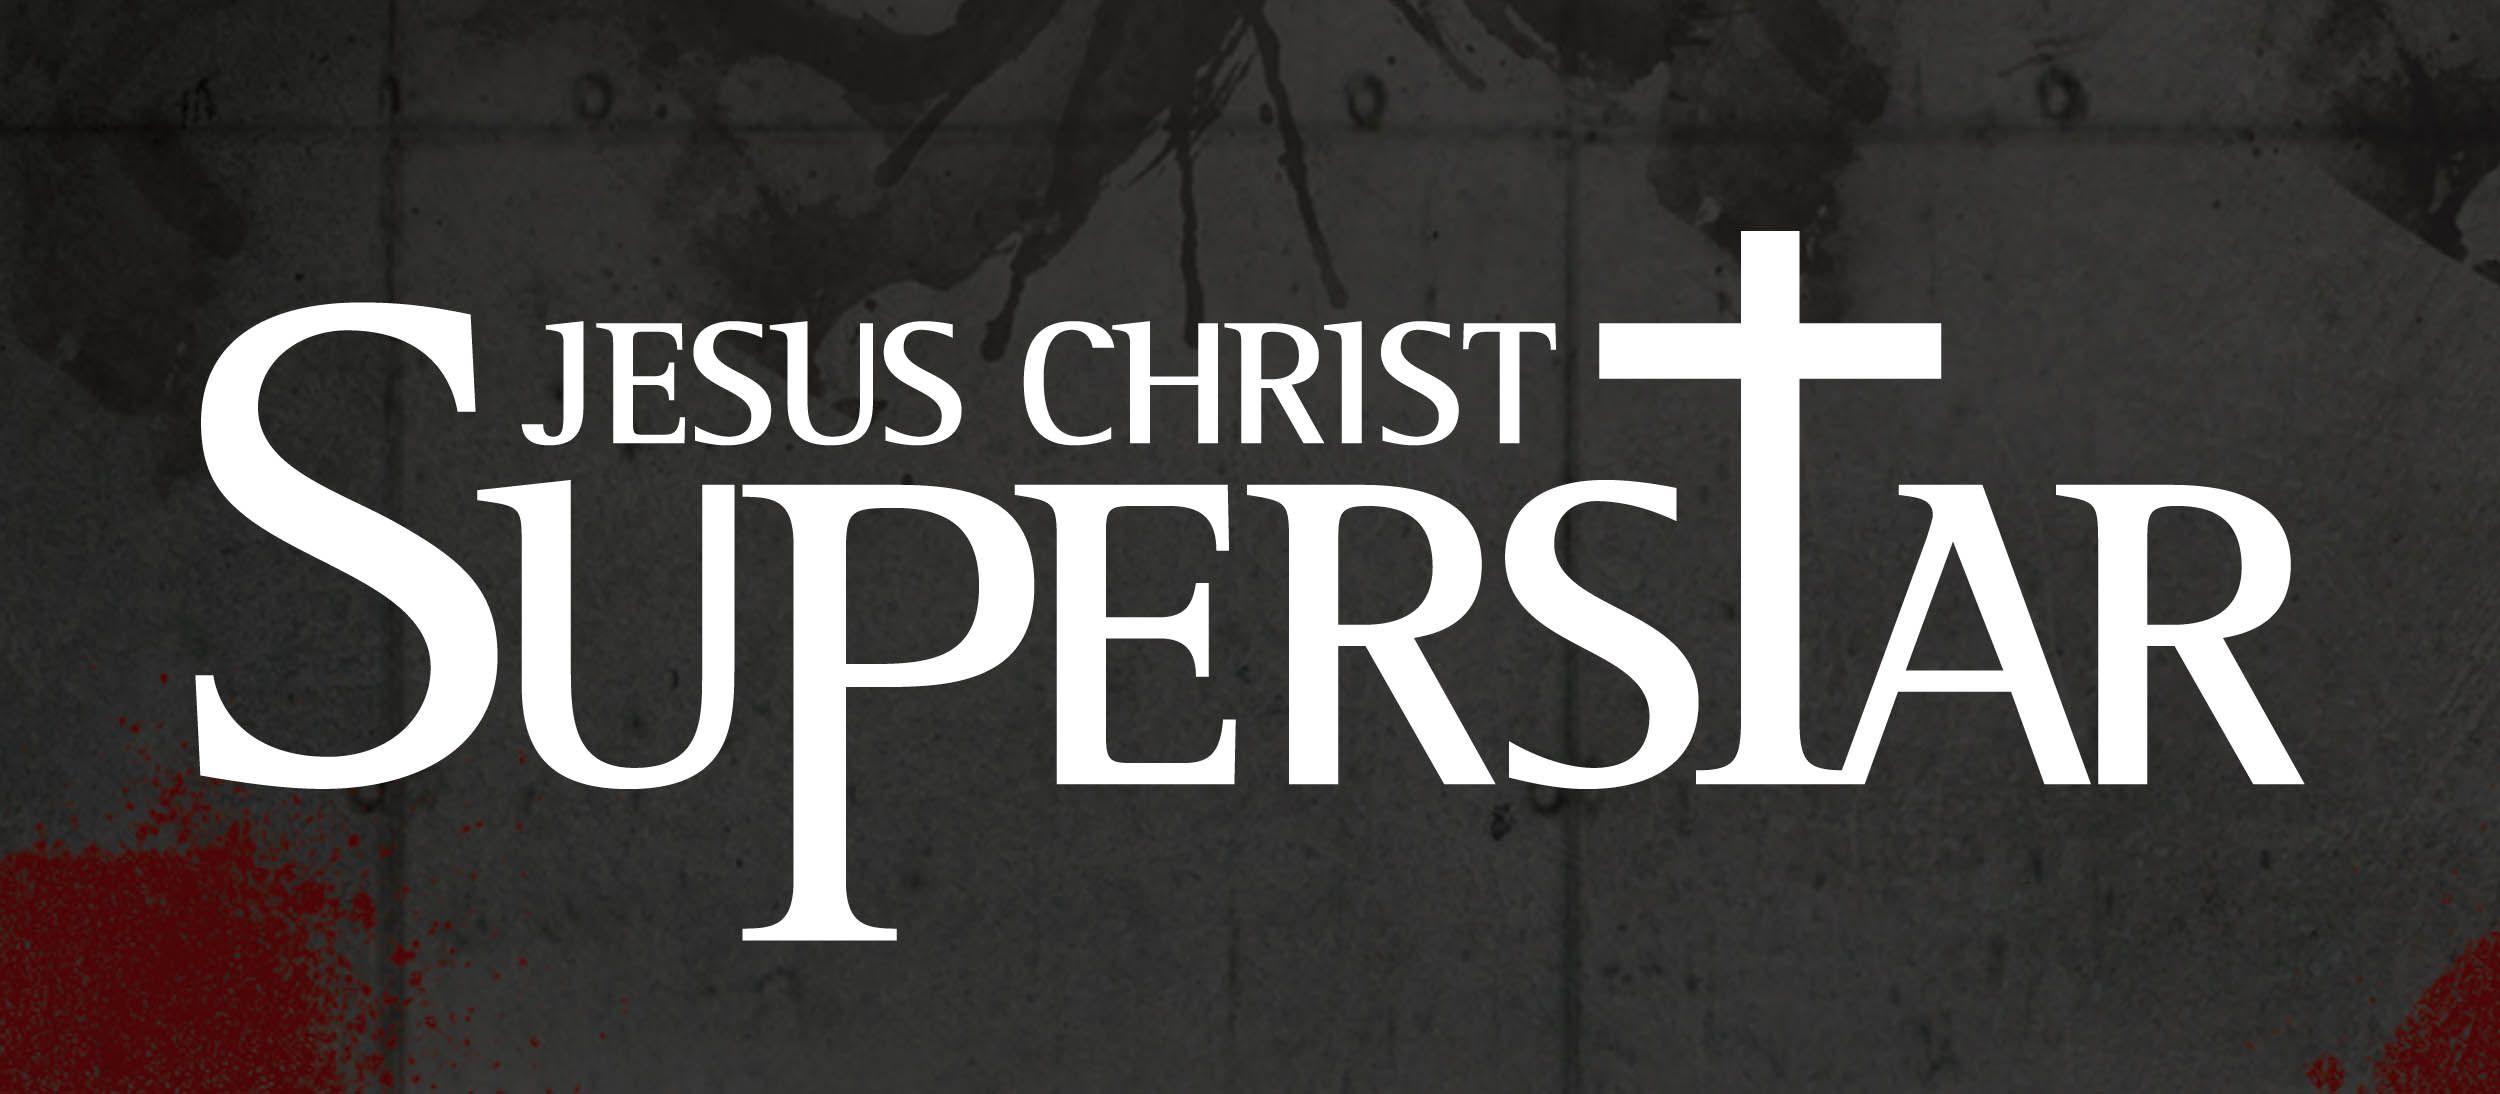 Jesus Christ Superstar. Download wallpaper page